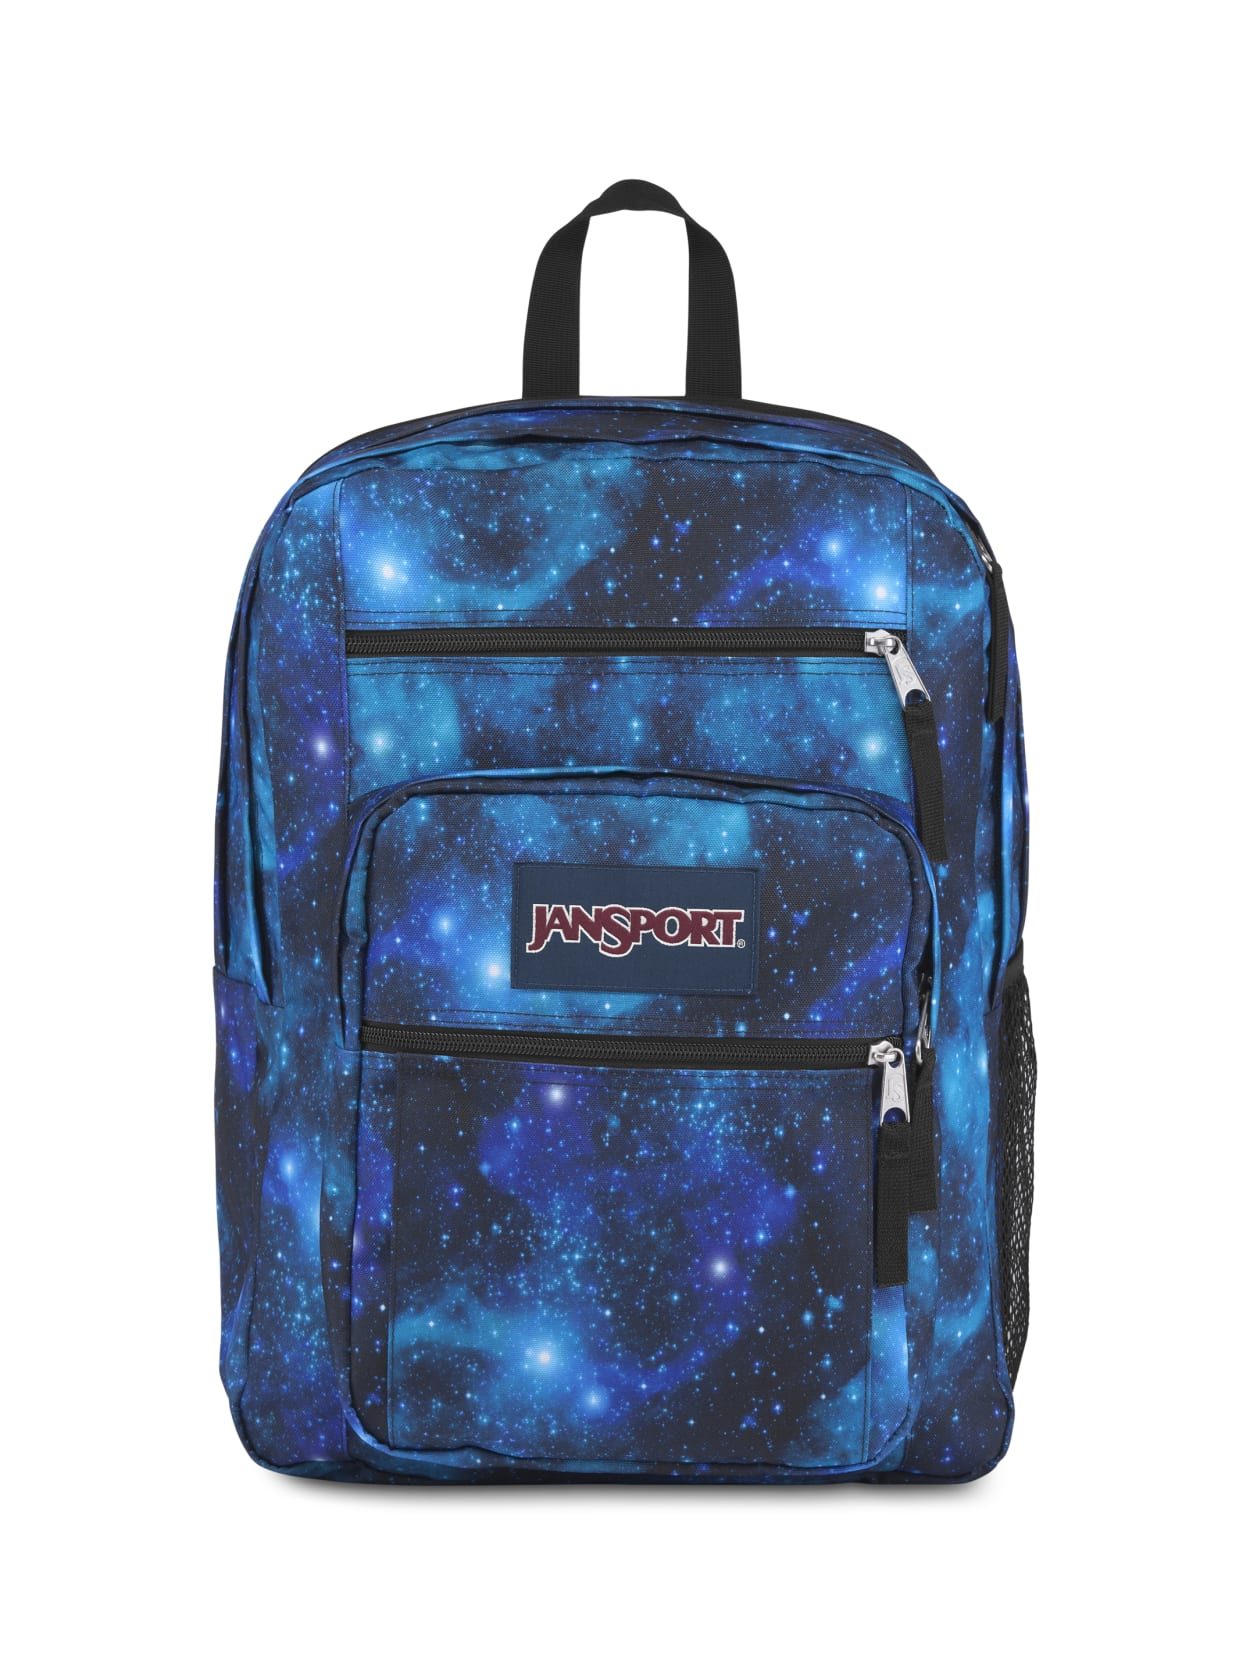 jansport bag galaxy design